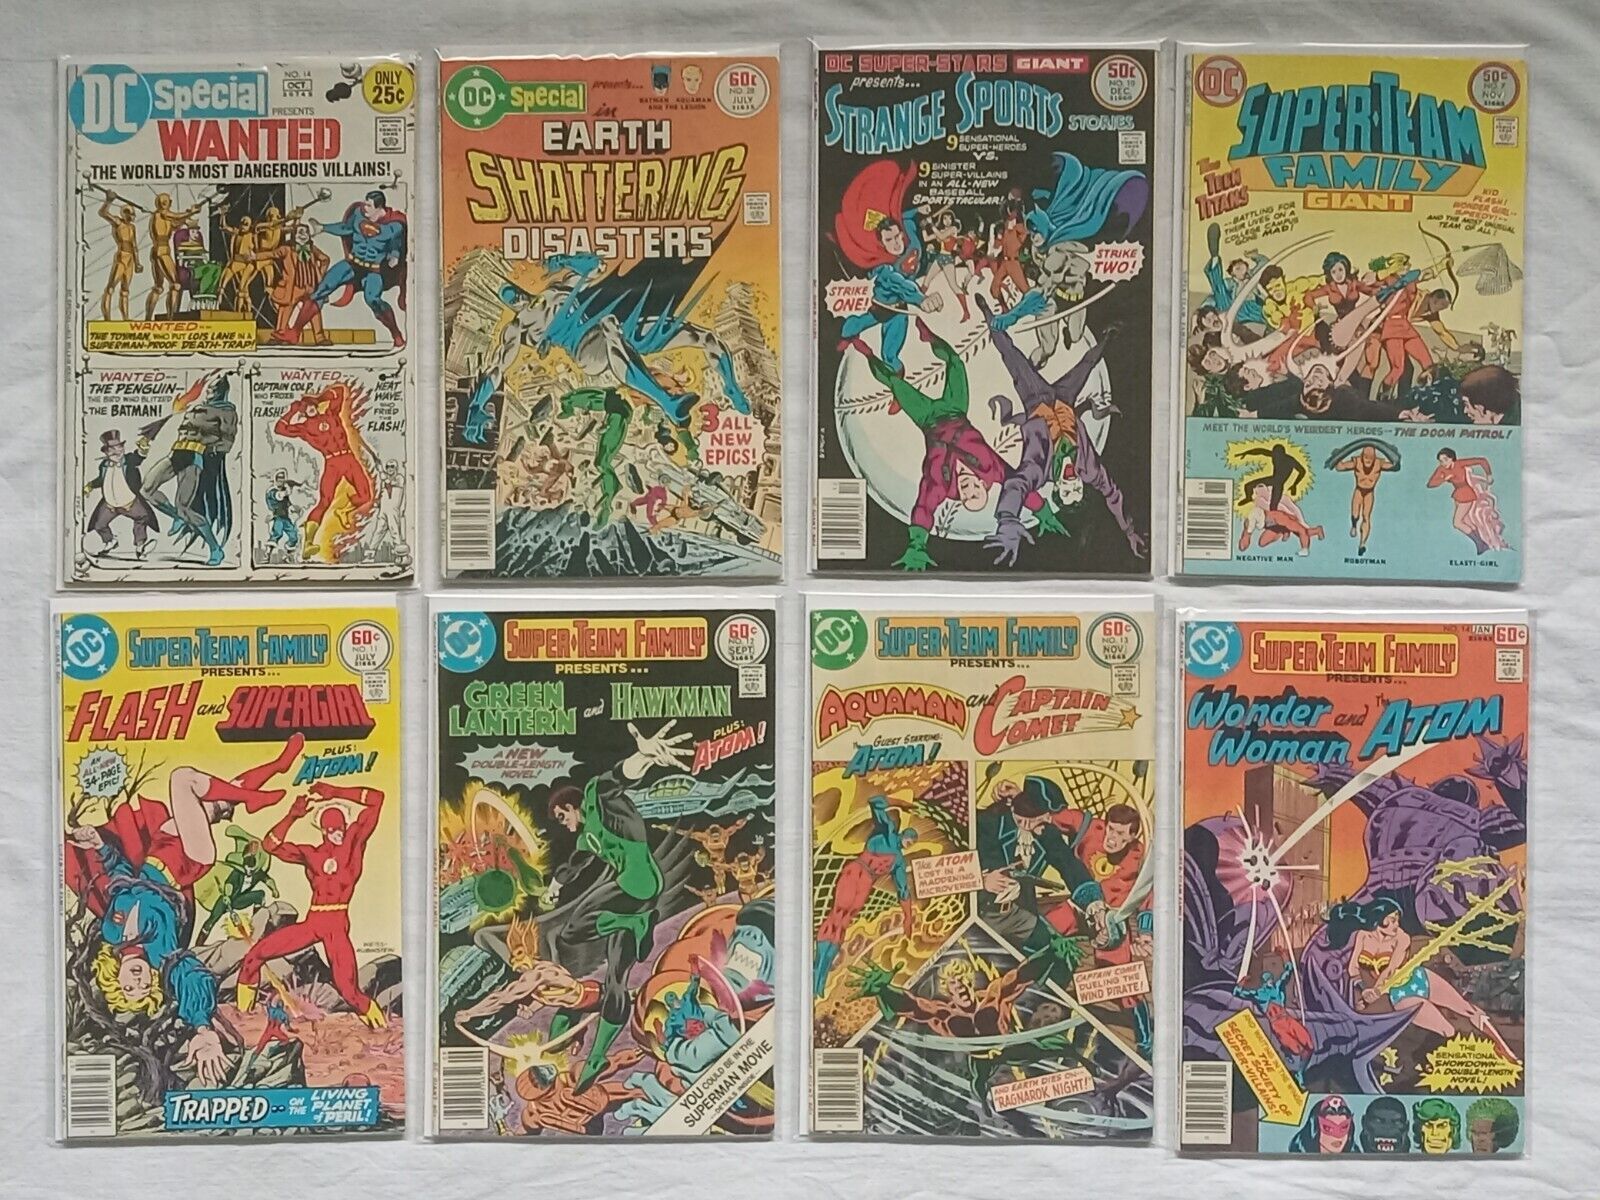 DC Super Stars #10/Super Team Family #7,11-14 comic collection JLA *DD